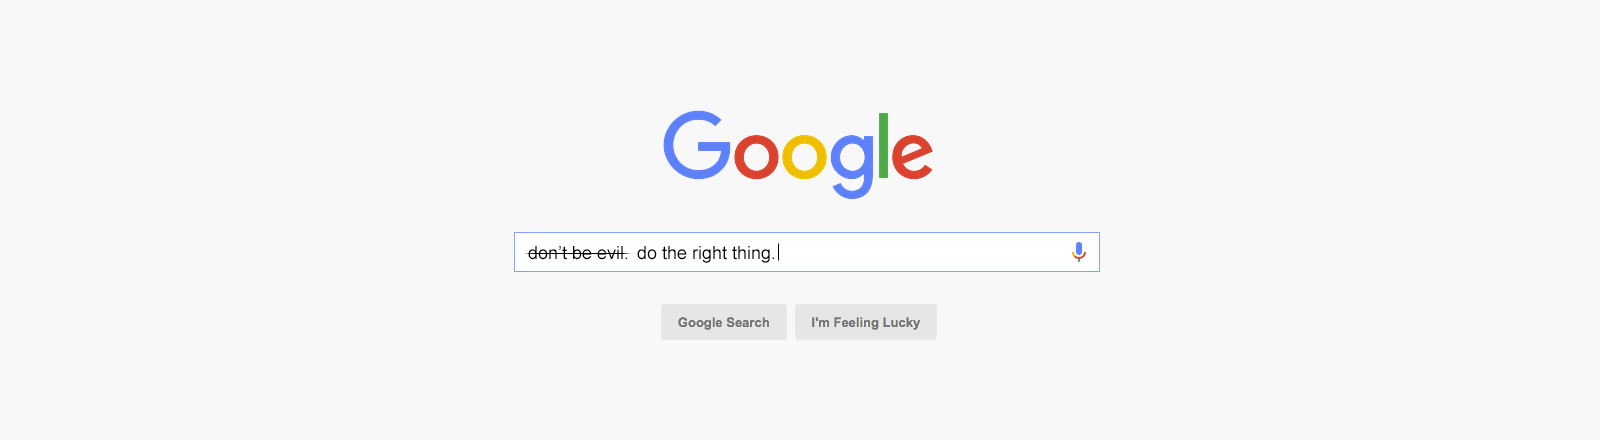 Гуглить. "Do the right thing" Google.